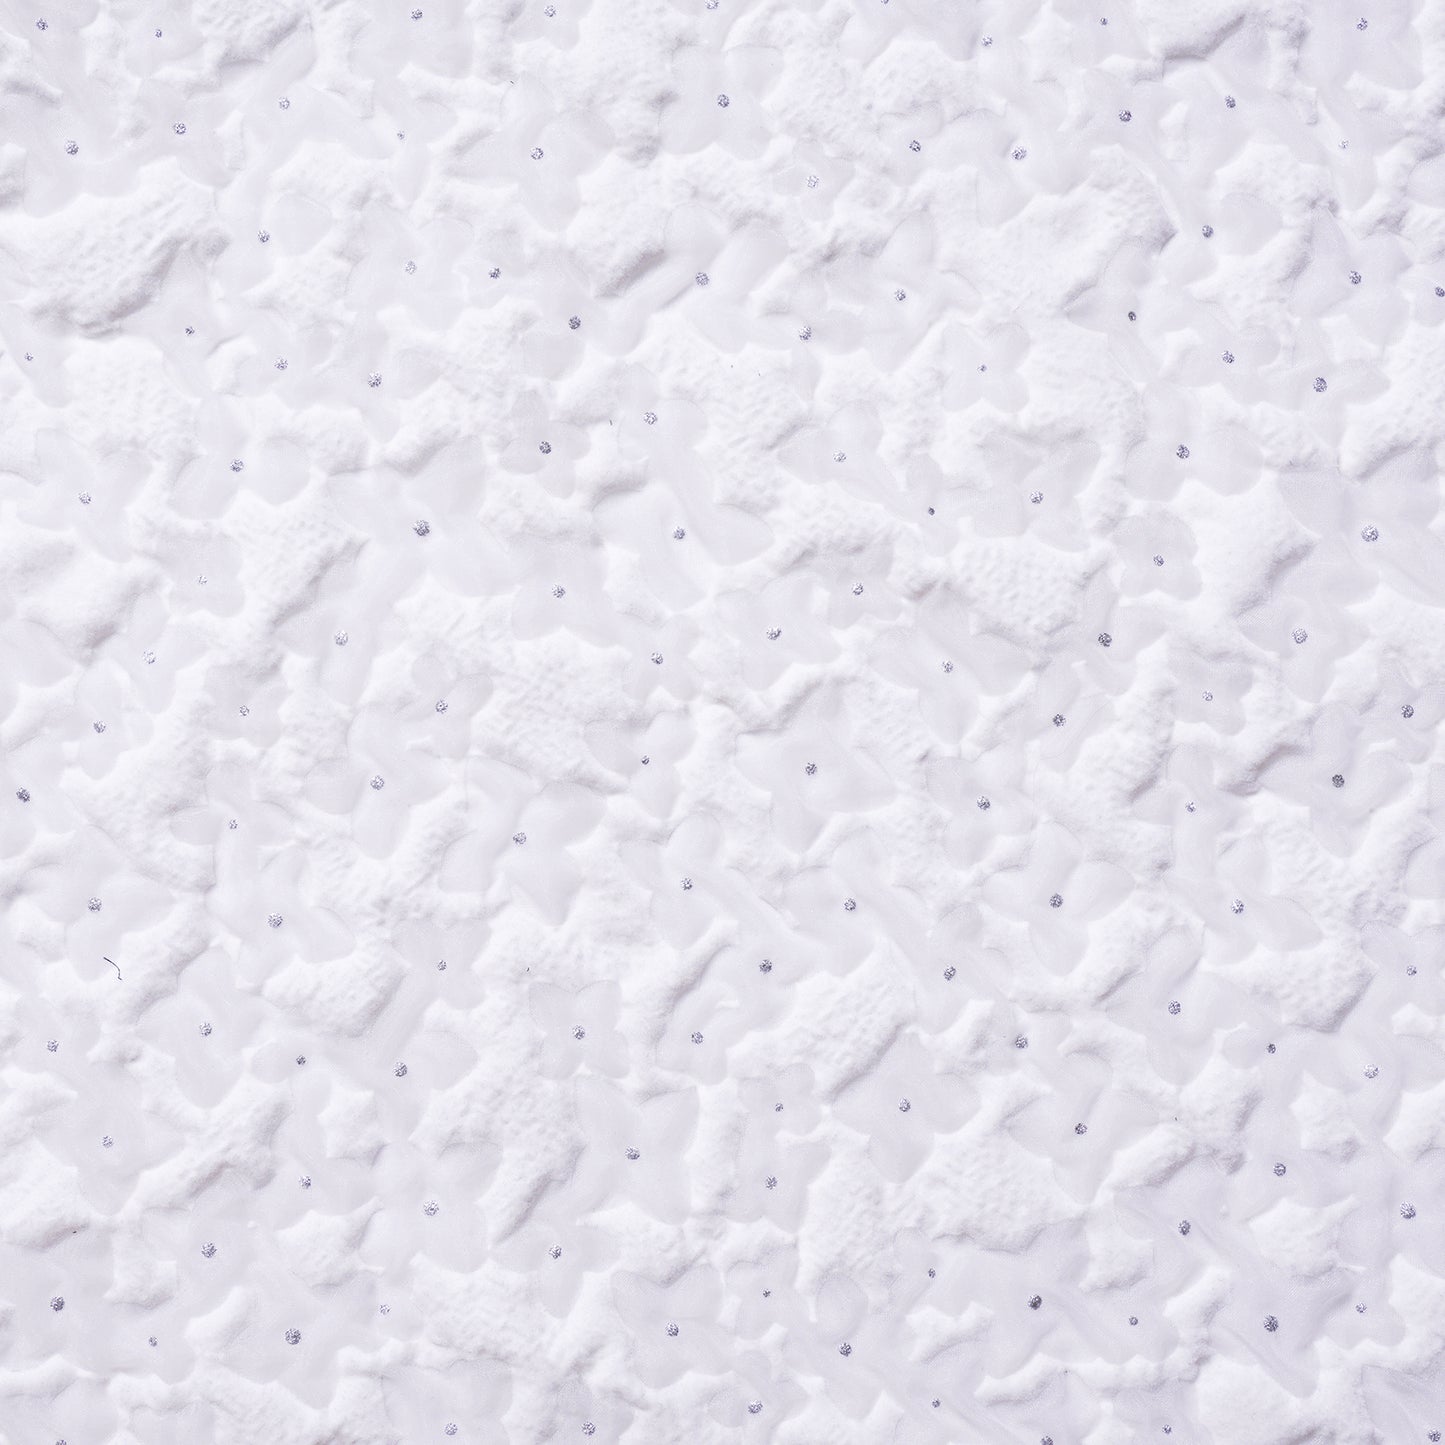 Polyester organdy shrink flocky glitter processing cherry blossom pattern white